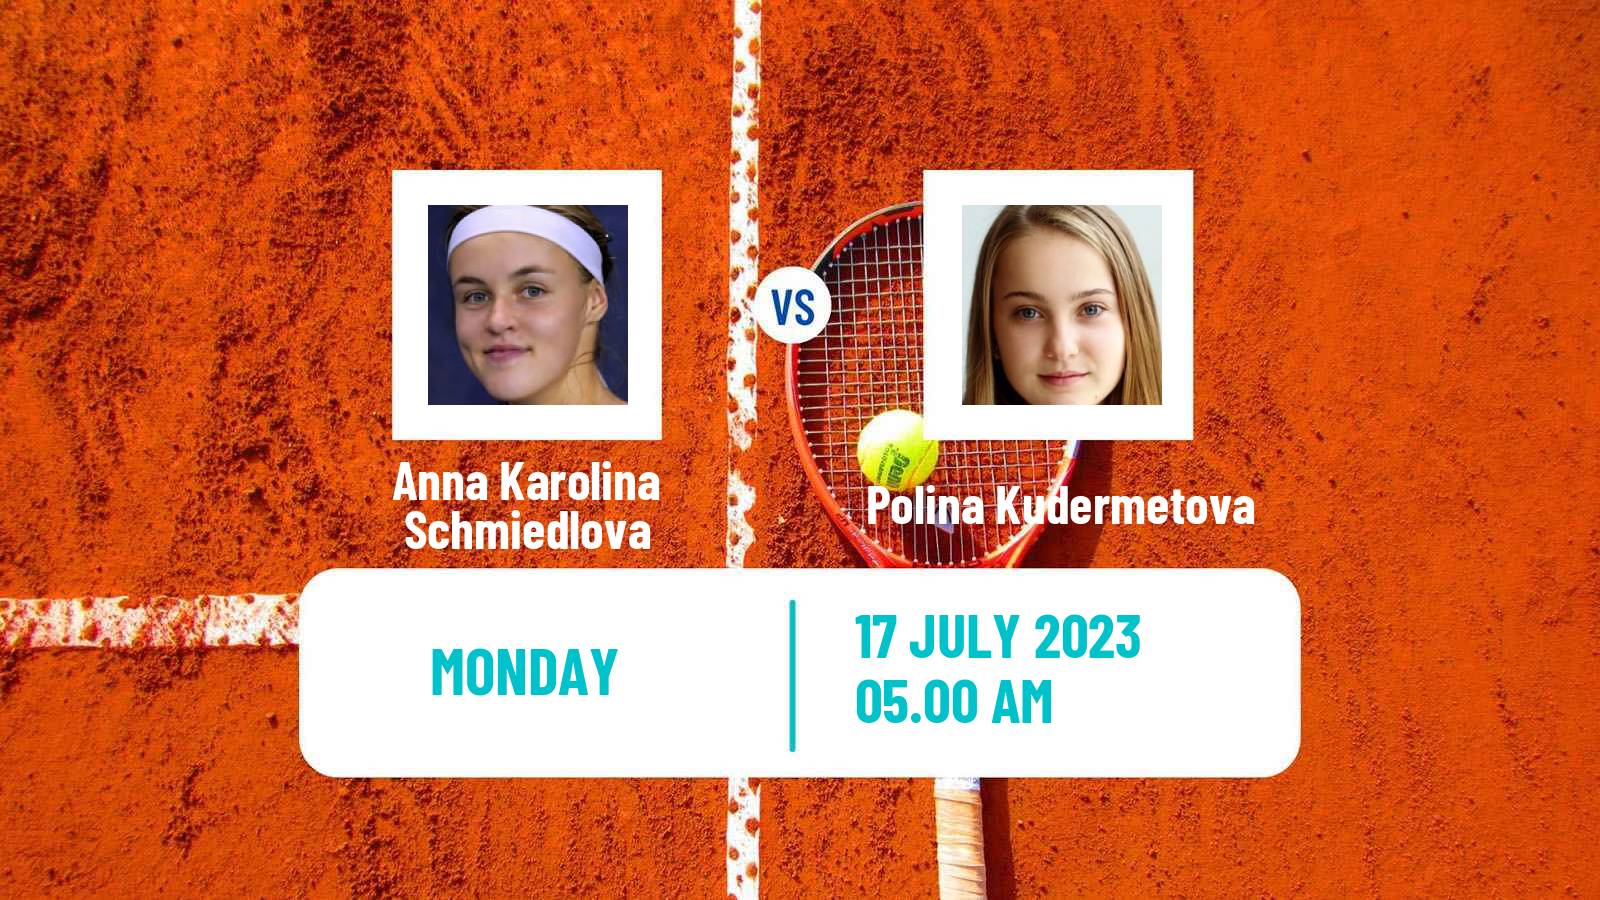 Tennis WTA Budapest Anna Karolina Schmiedlova - Polina Kudermetova